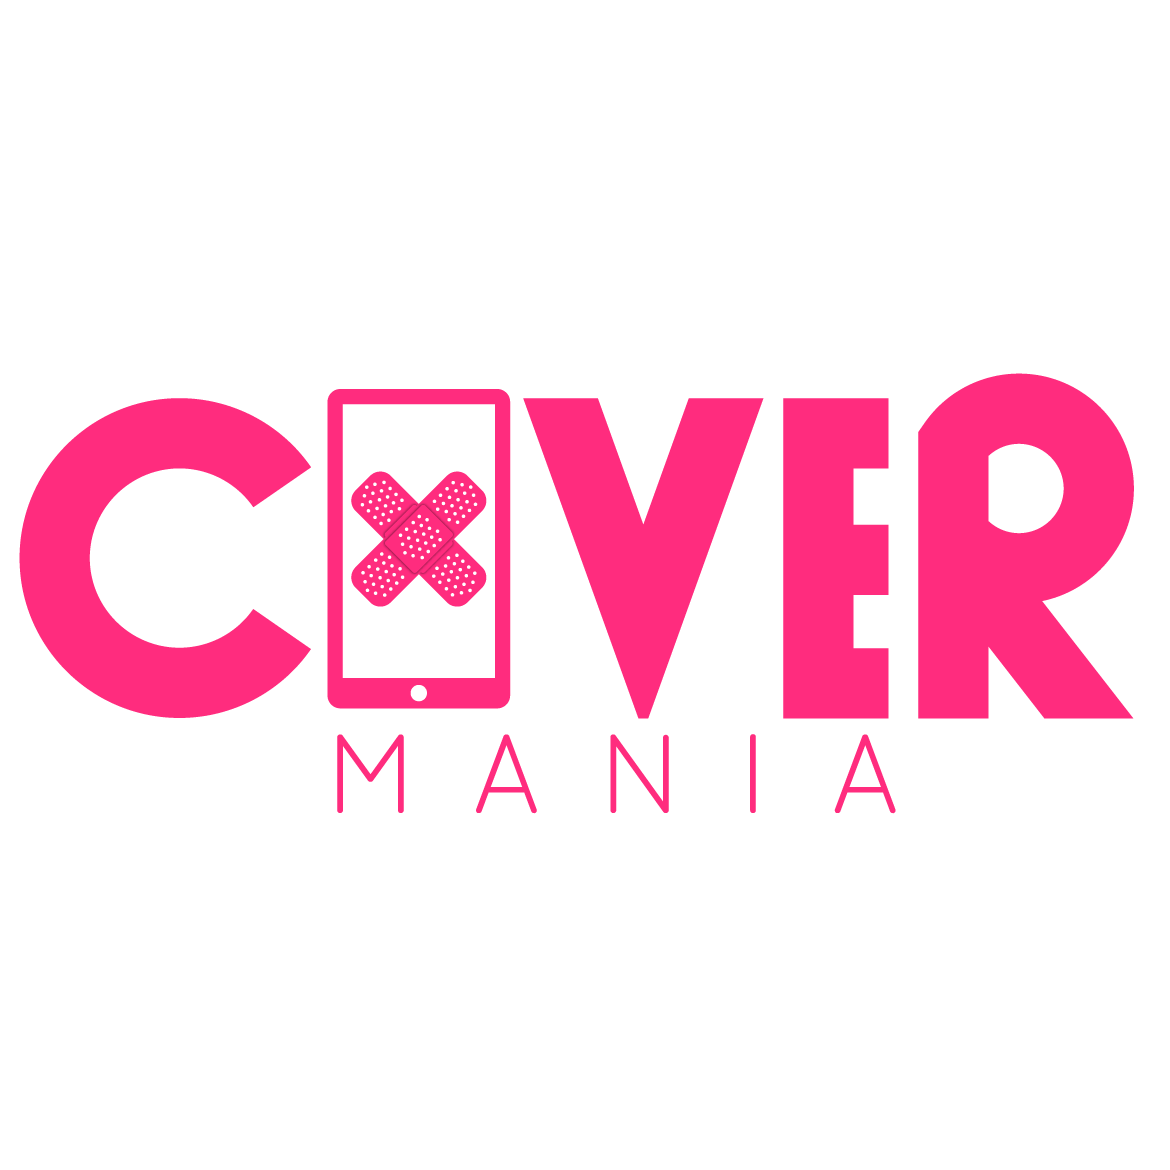 cover mania